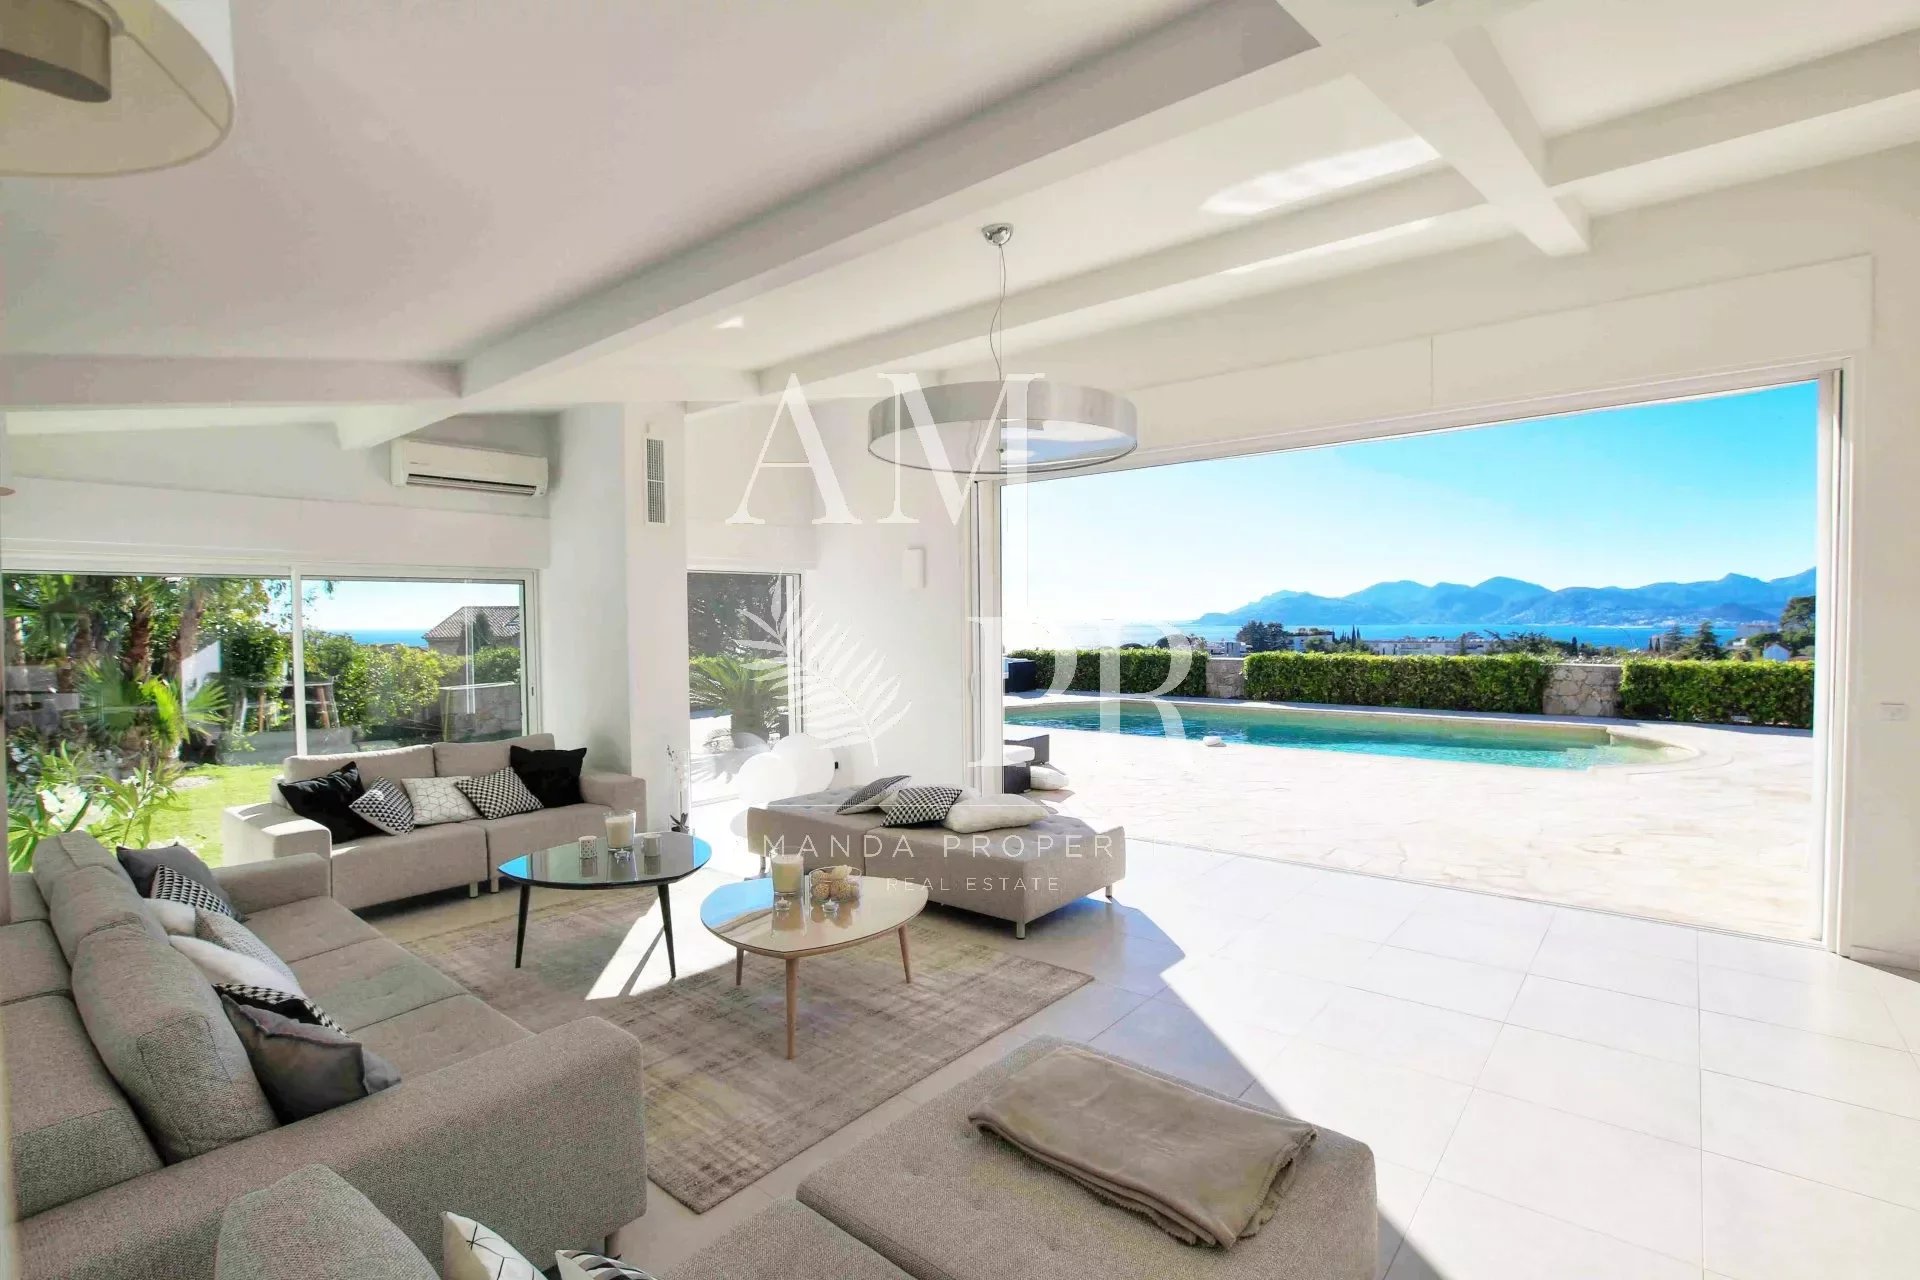 Cannes Croix des Gardes - Contemporary Villa of 300sqm - Panoramic Sea View - 12 People